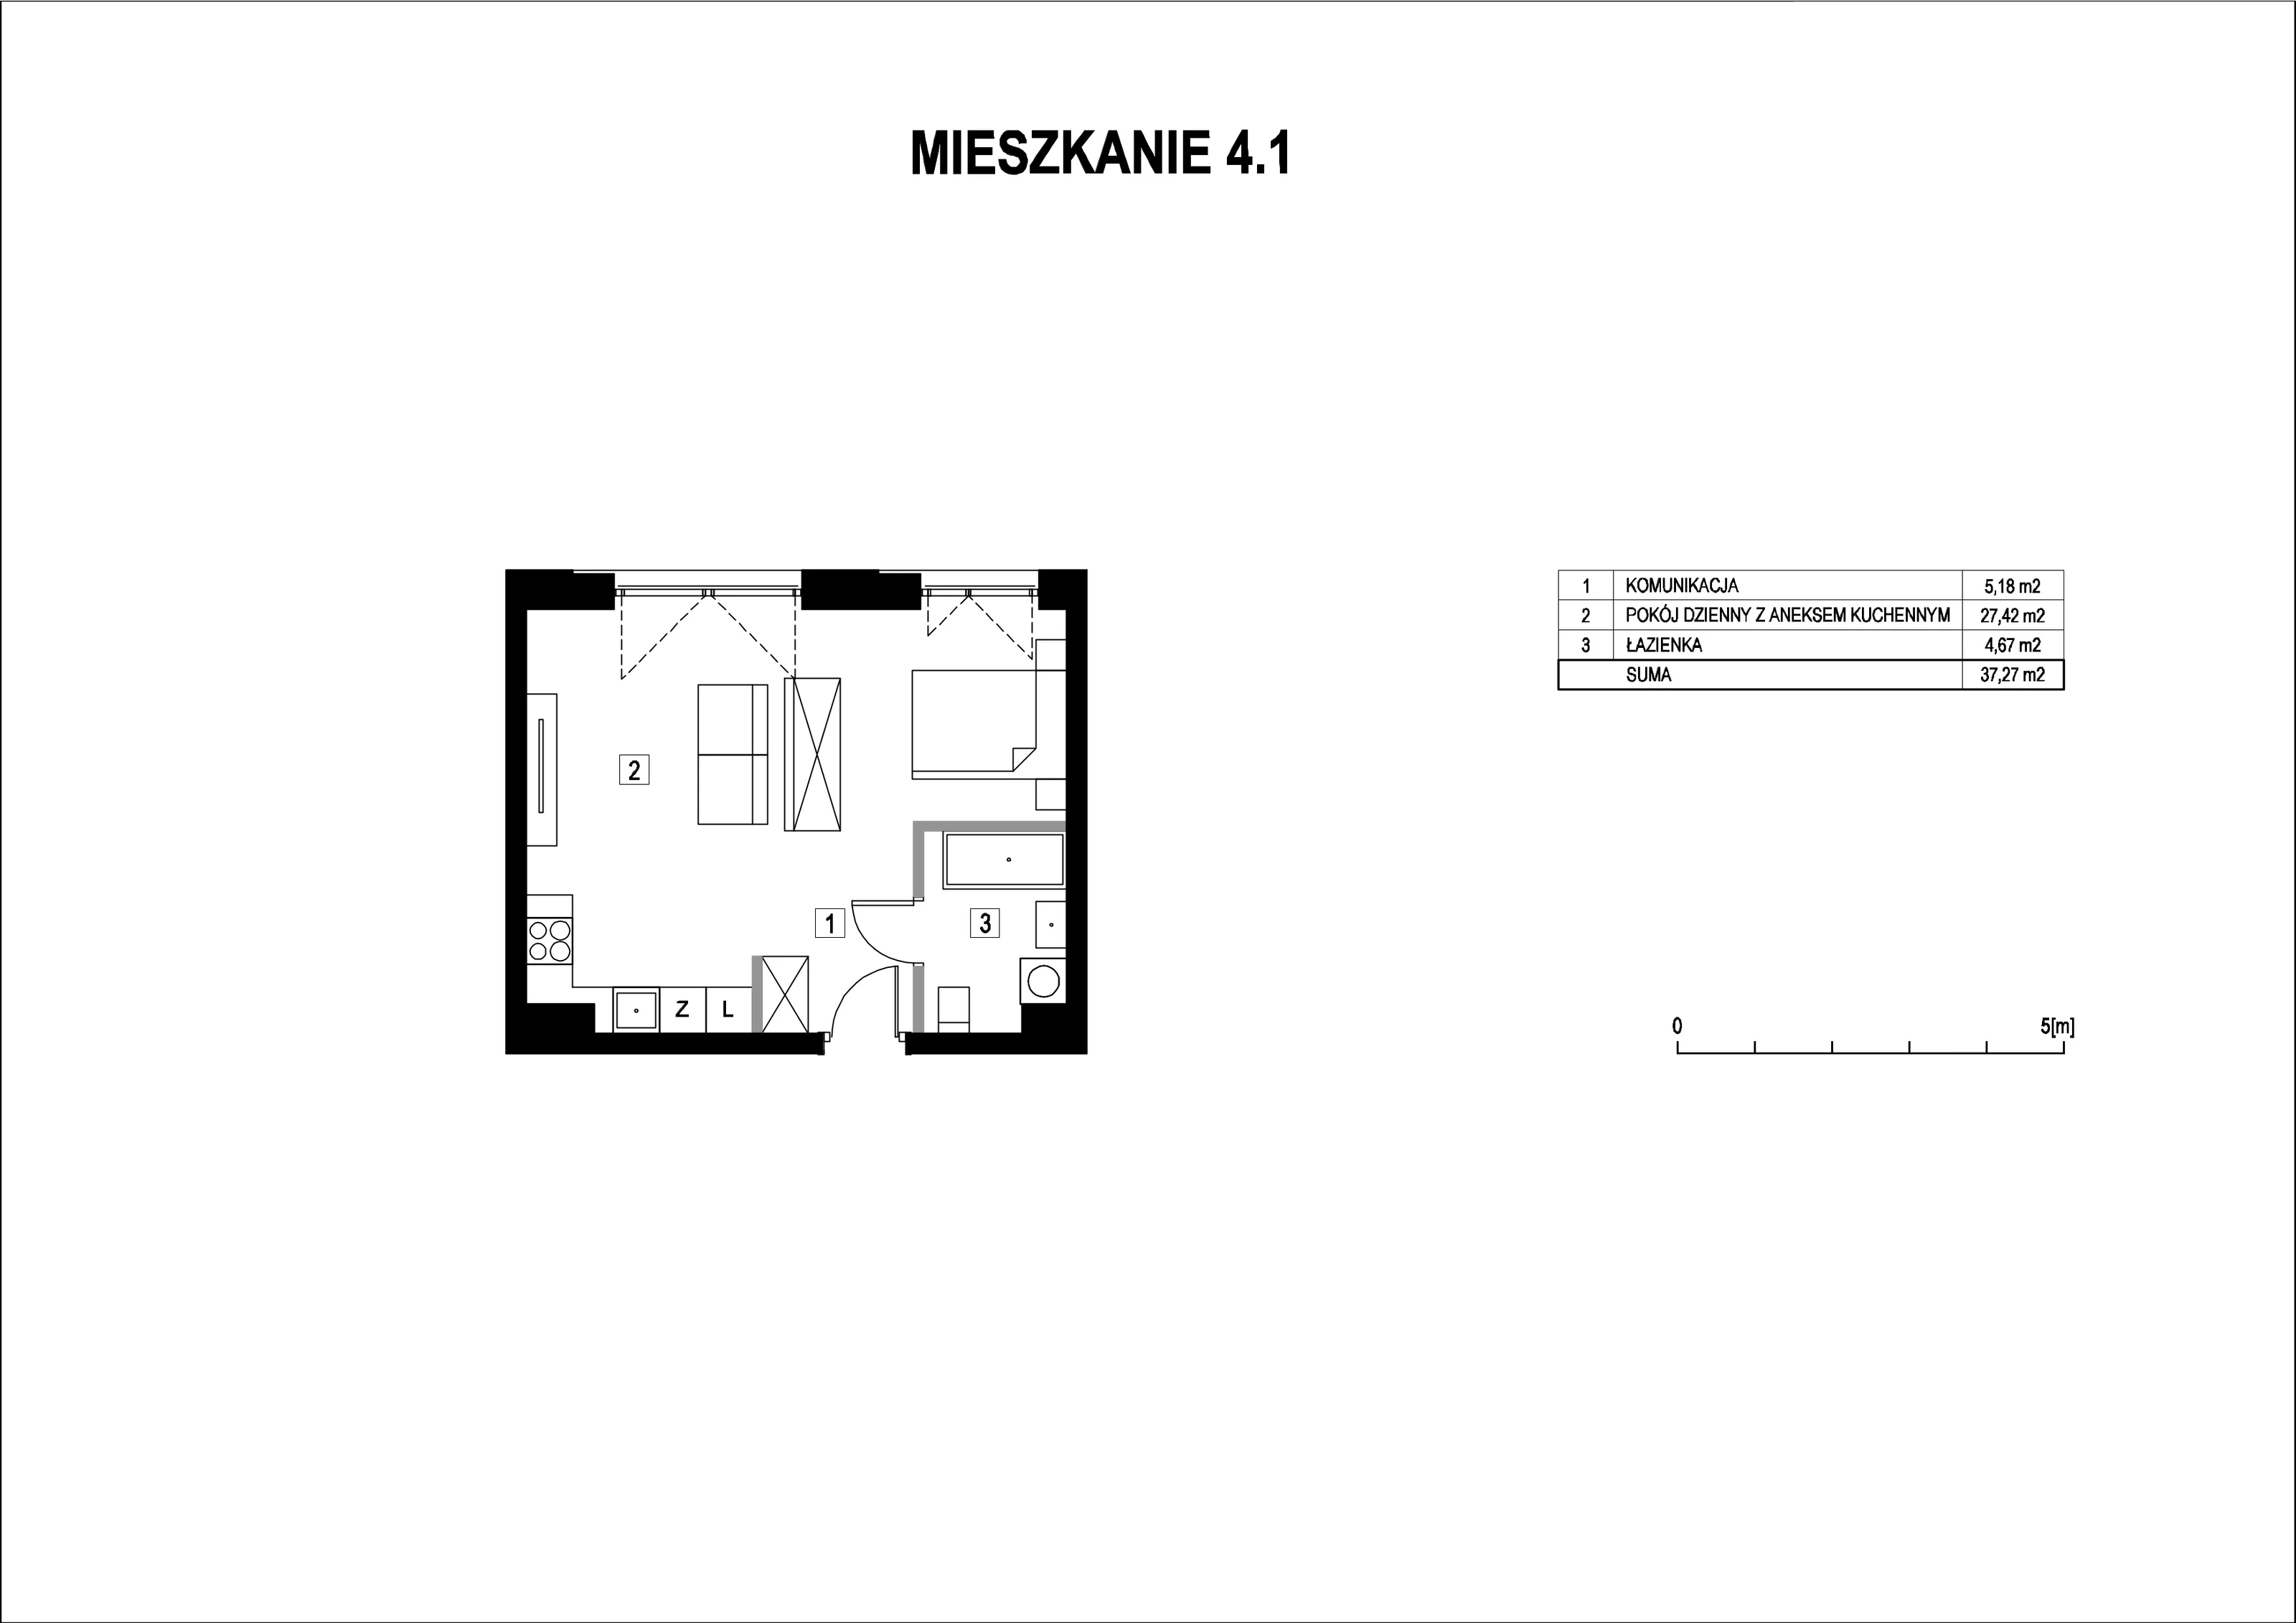 Apartament 37,27 m², piętro 4, oferta nr M4_1, La Vie Art, Łódź, Polesie, ul. 6 Sierpnia 10